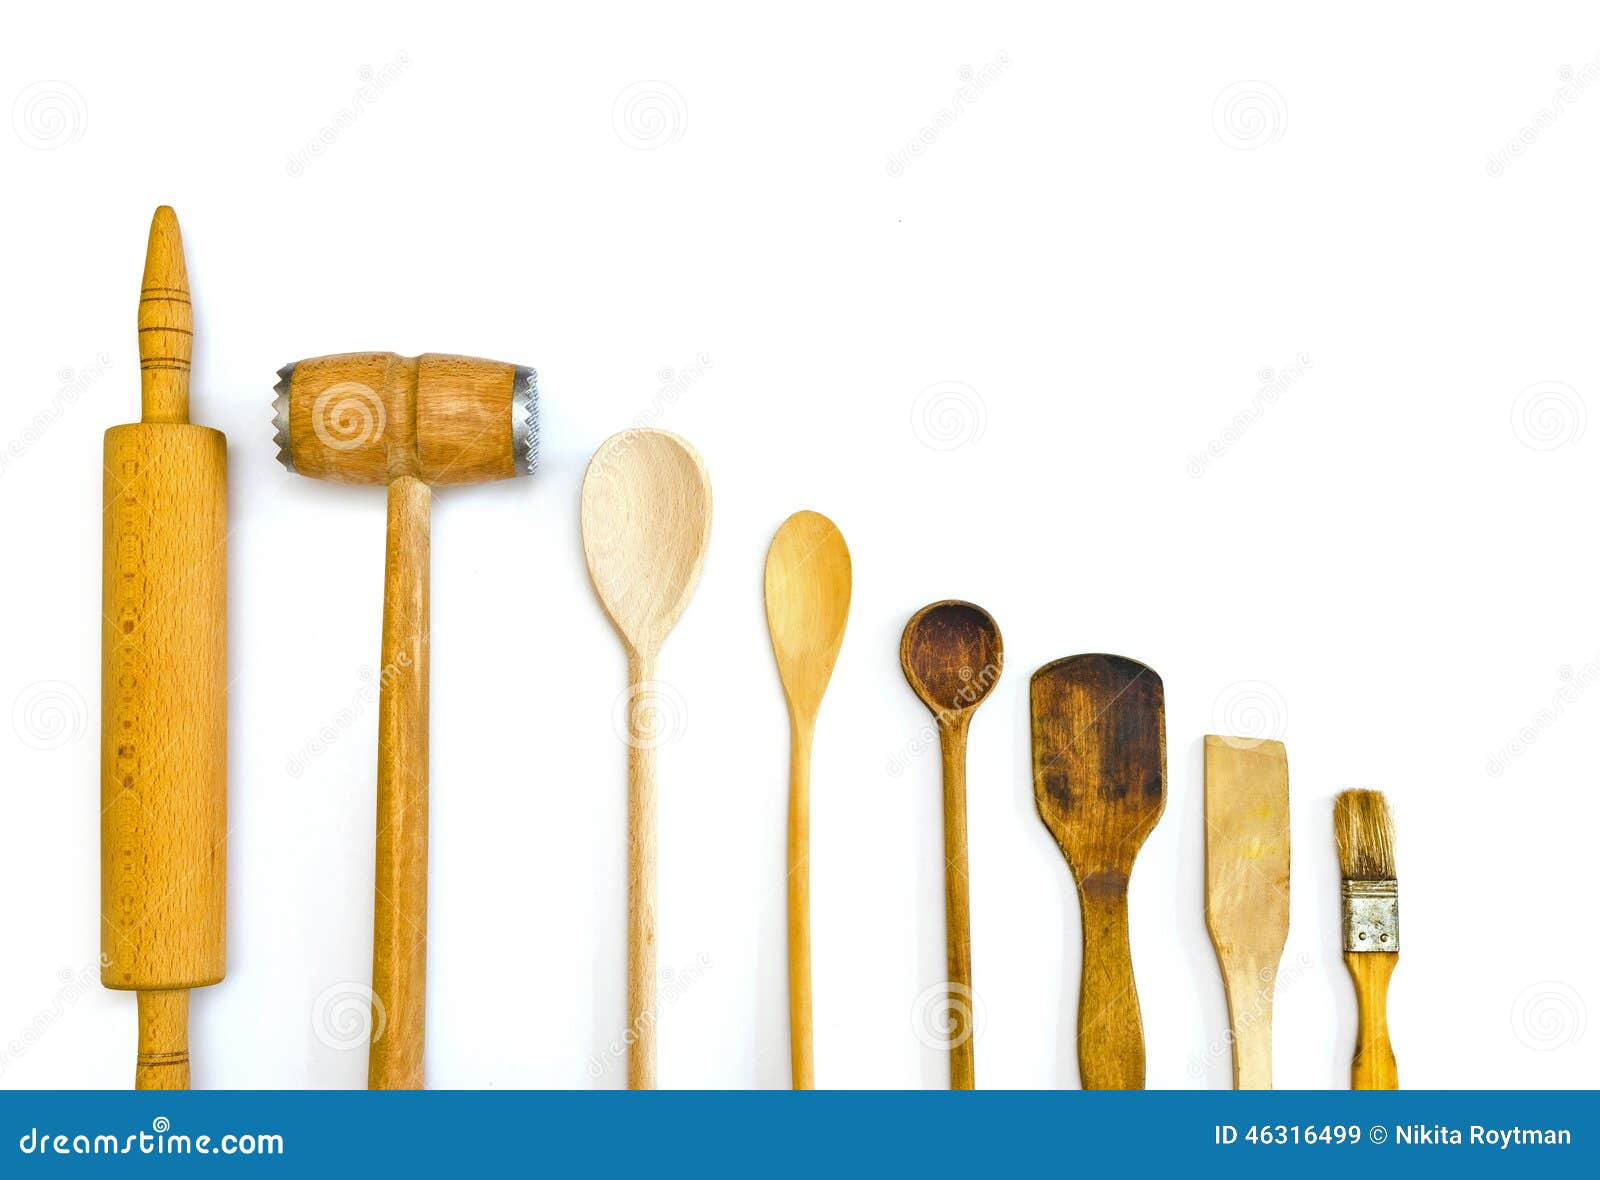 https://thumbs.dreamstime.com/z/row-wooden-kitchen-utensils-white-background-46316499.jpg